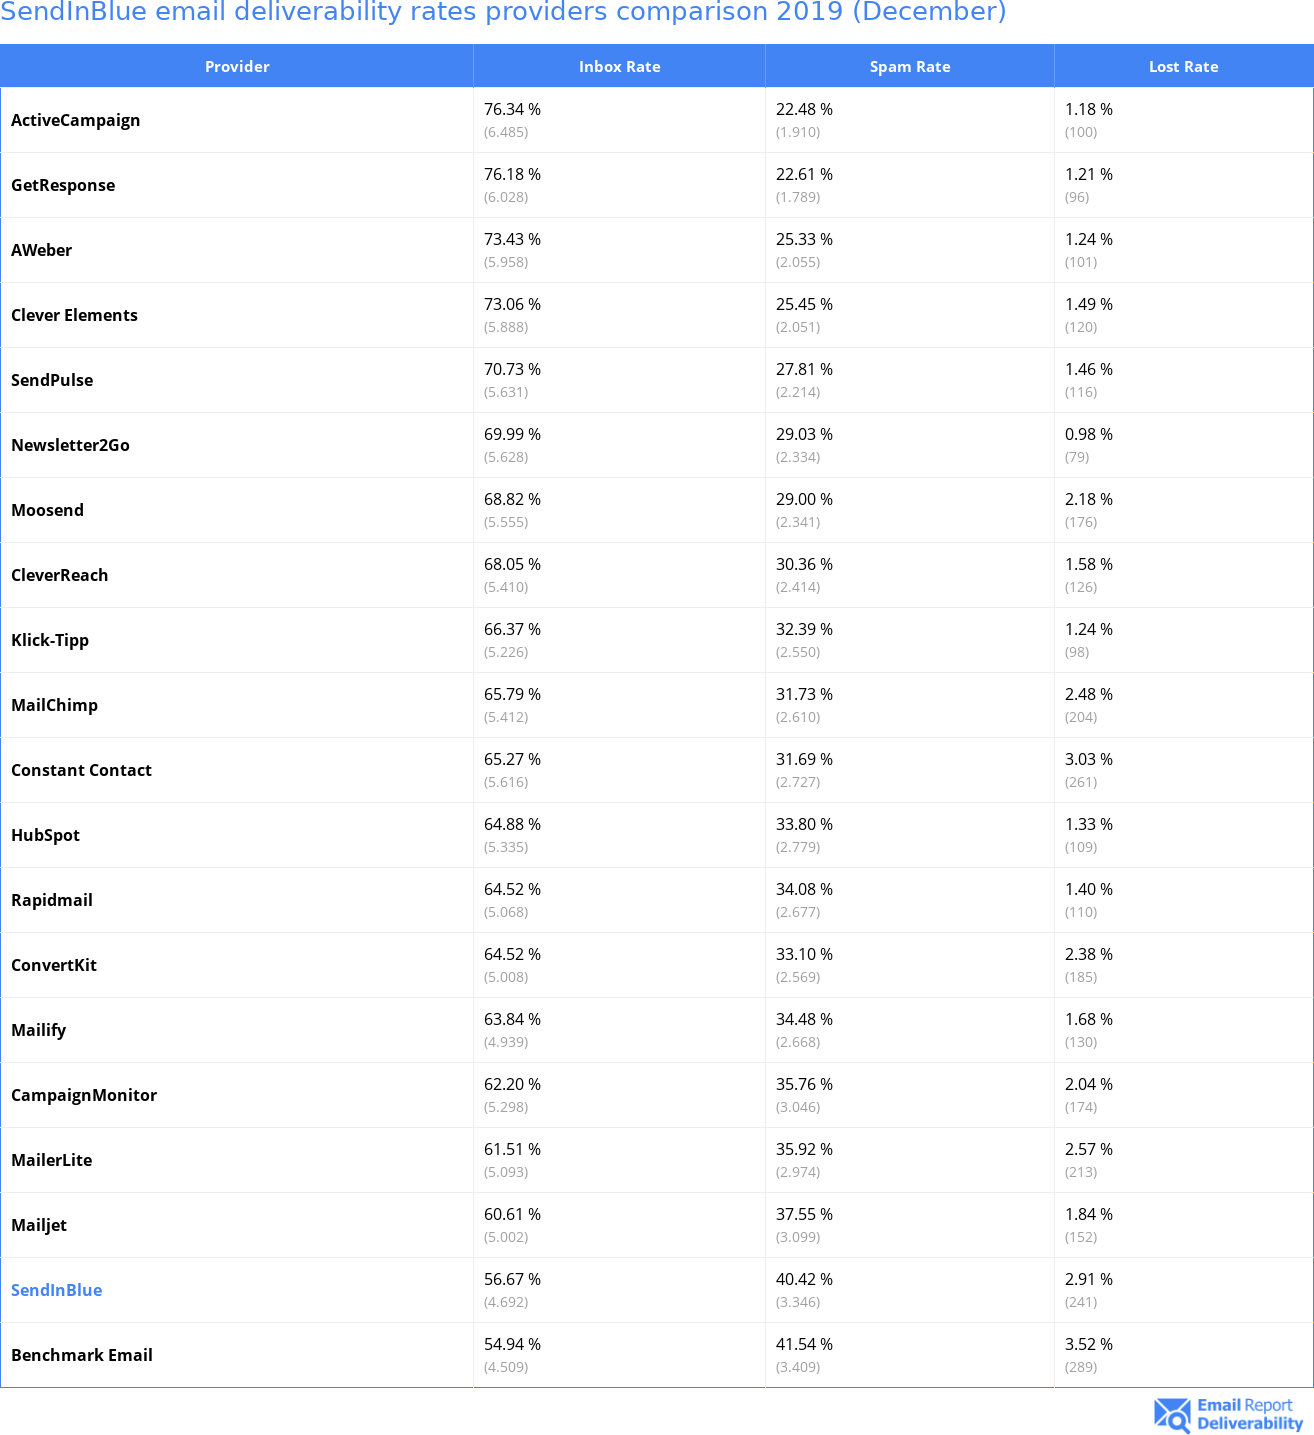 SendInBlue email deliverability rates providers comparison 2019 (December)